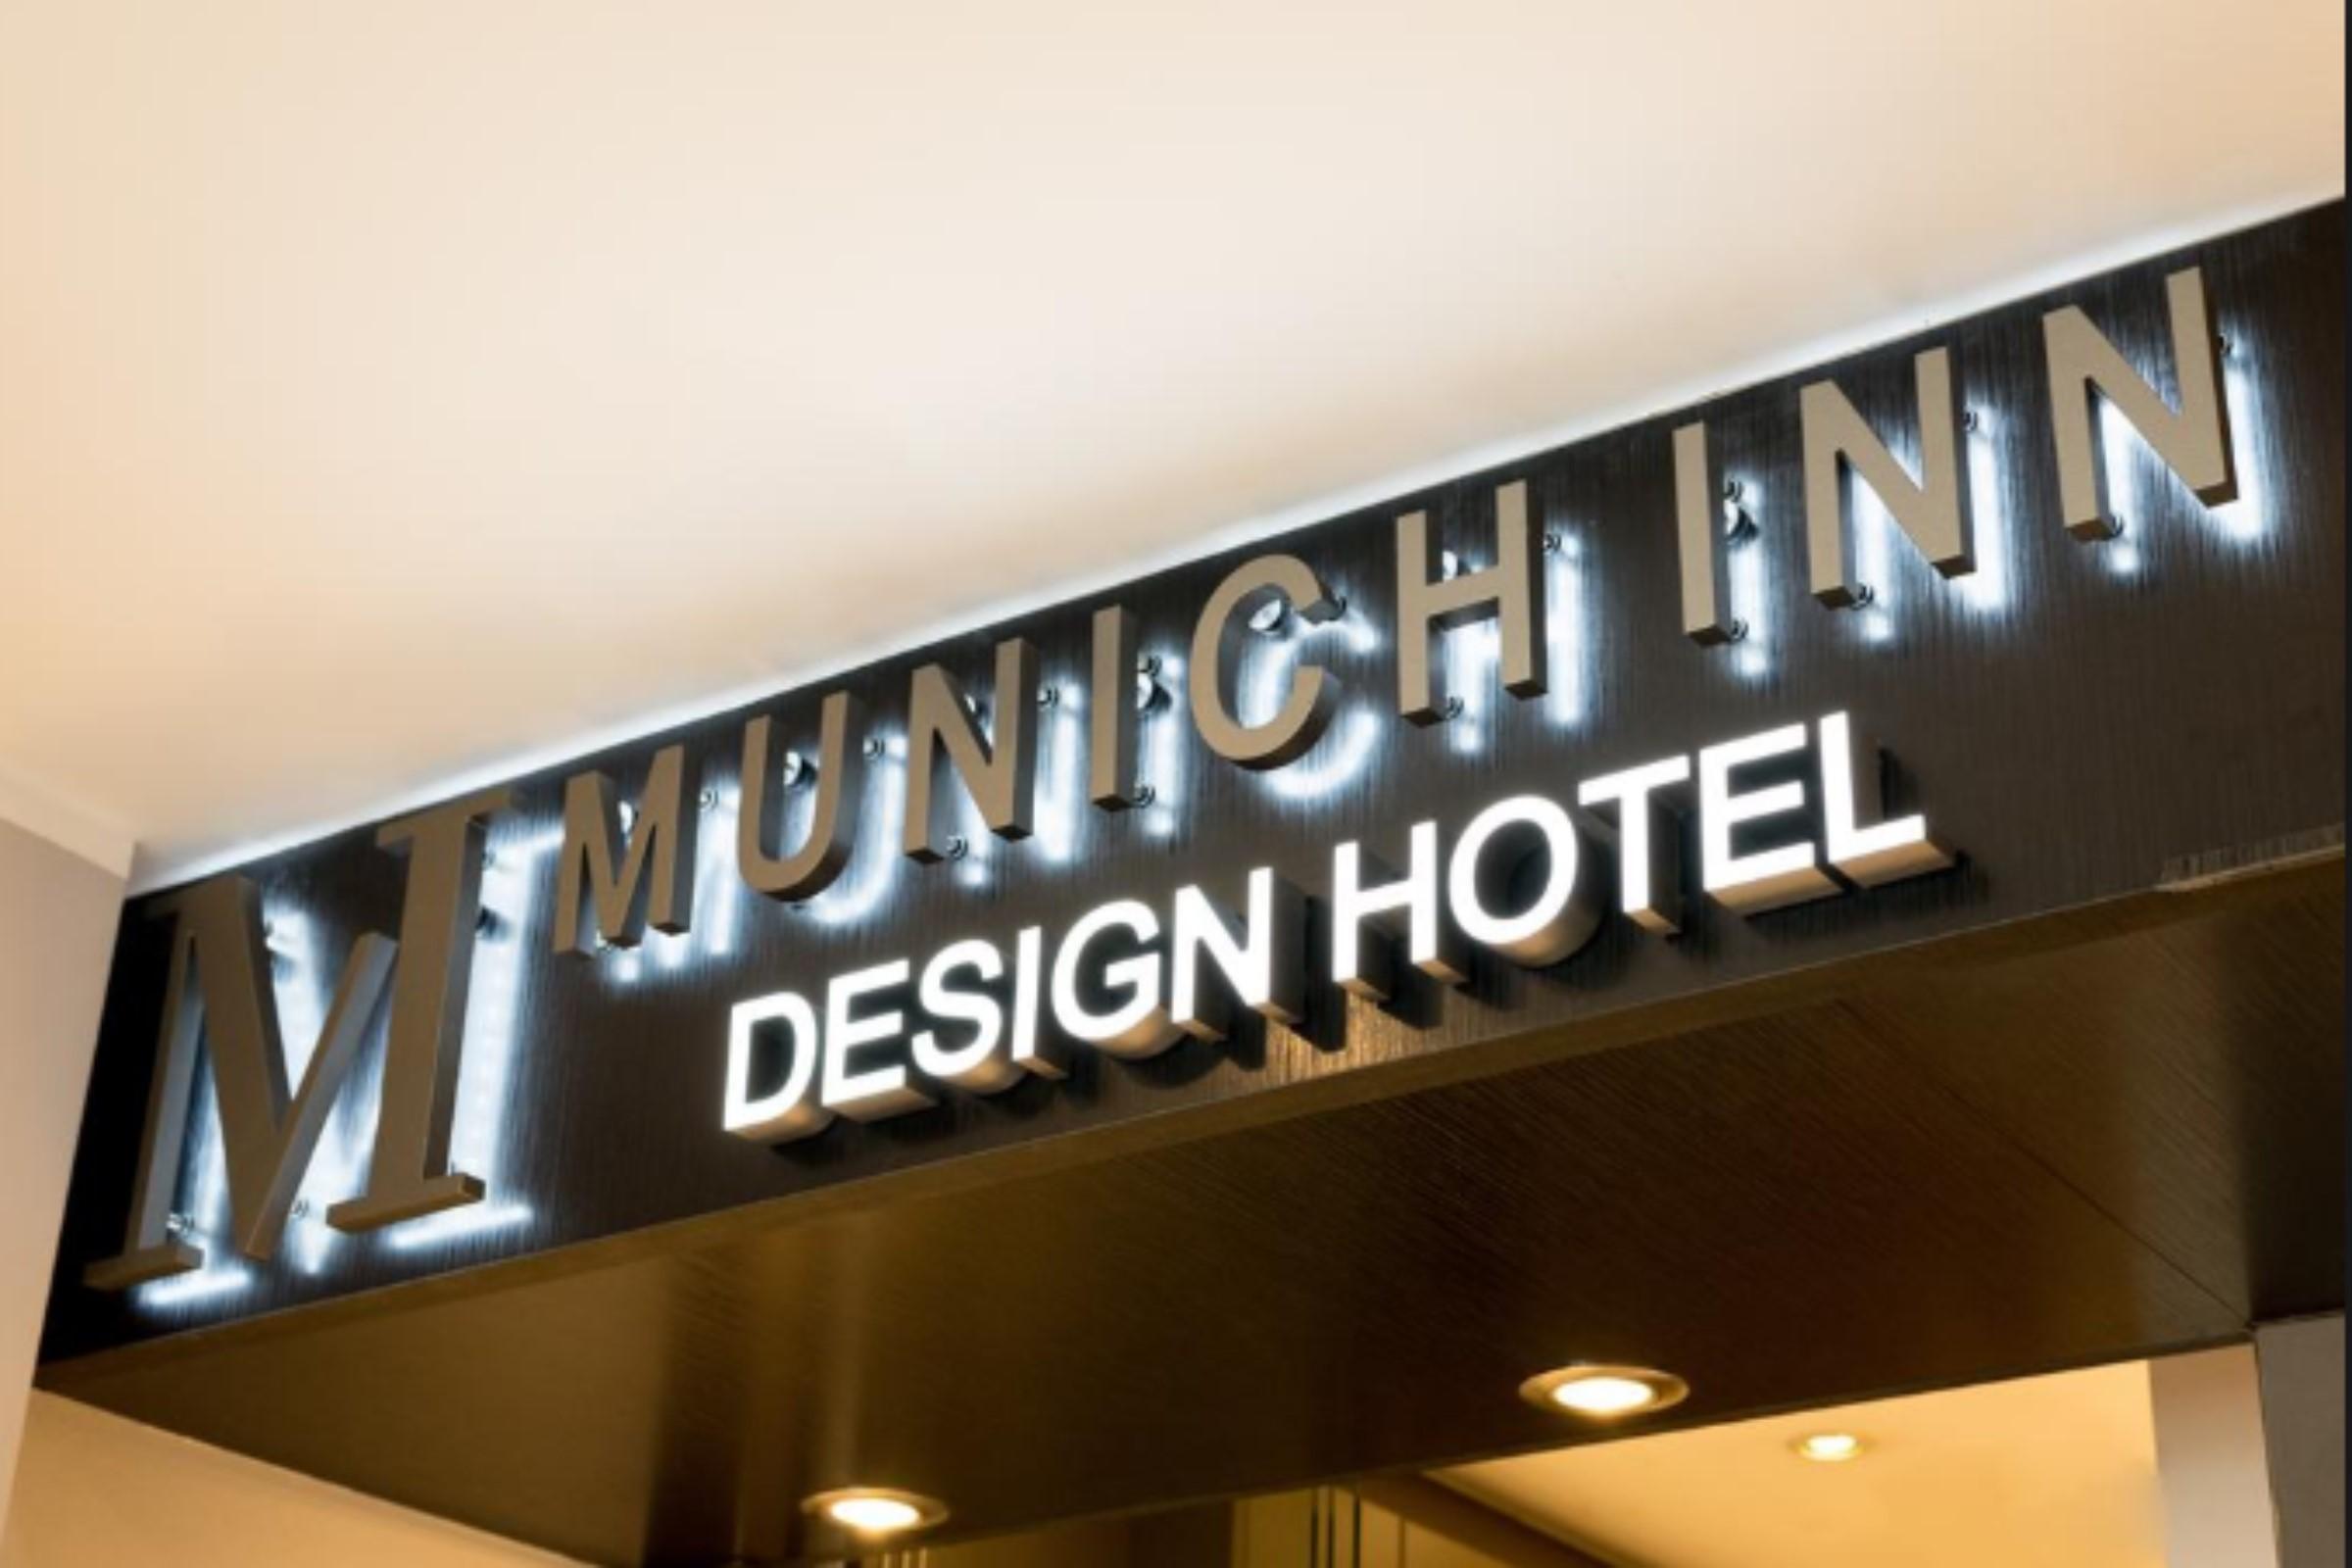 Hotel Munich Inn - Design Hotel Exterior photo